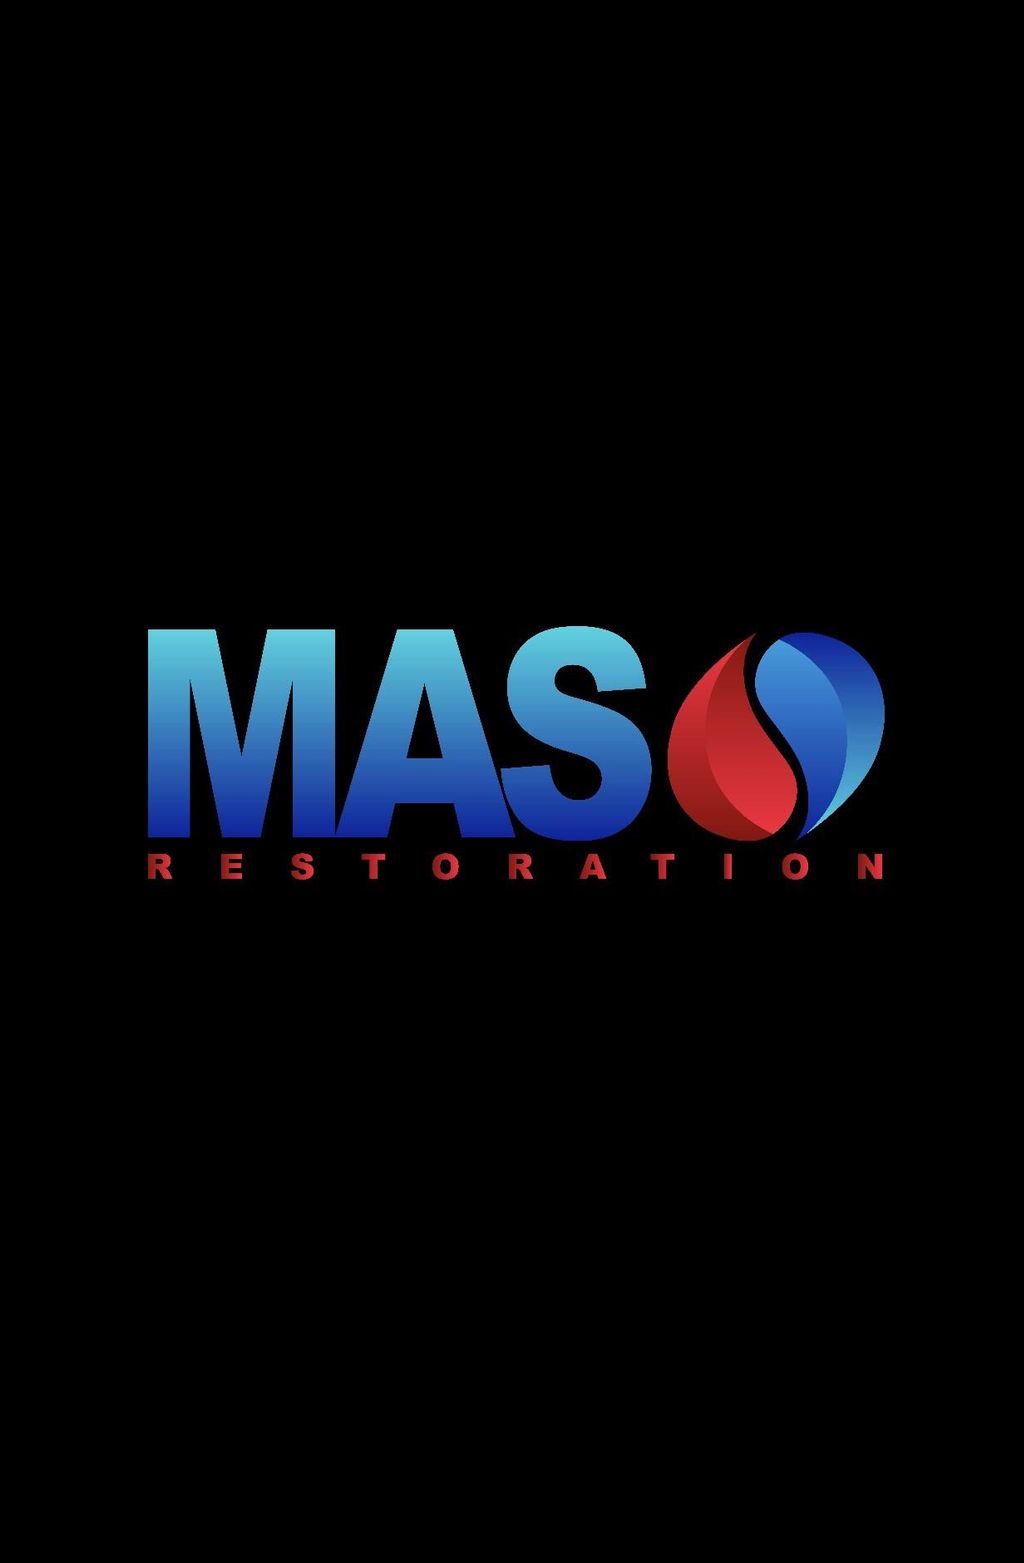 MASO Restoration, LLC